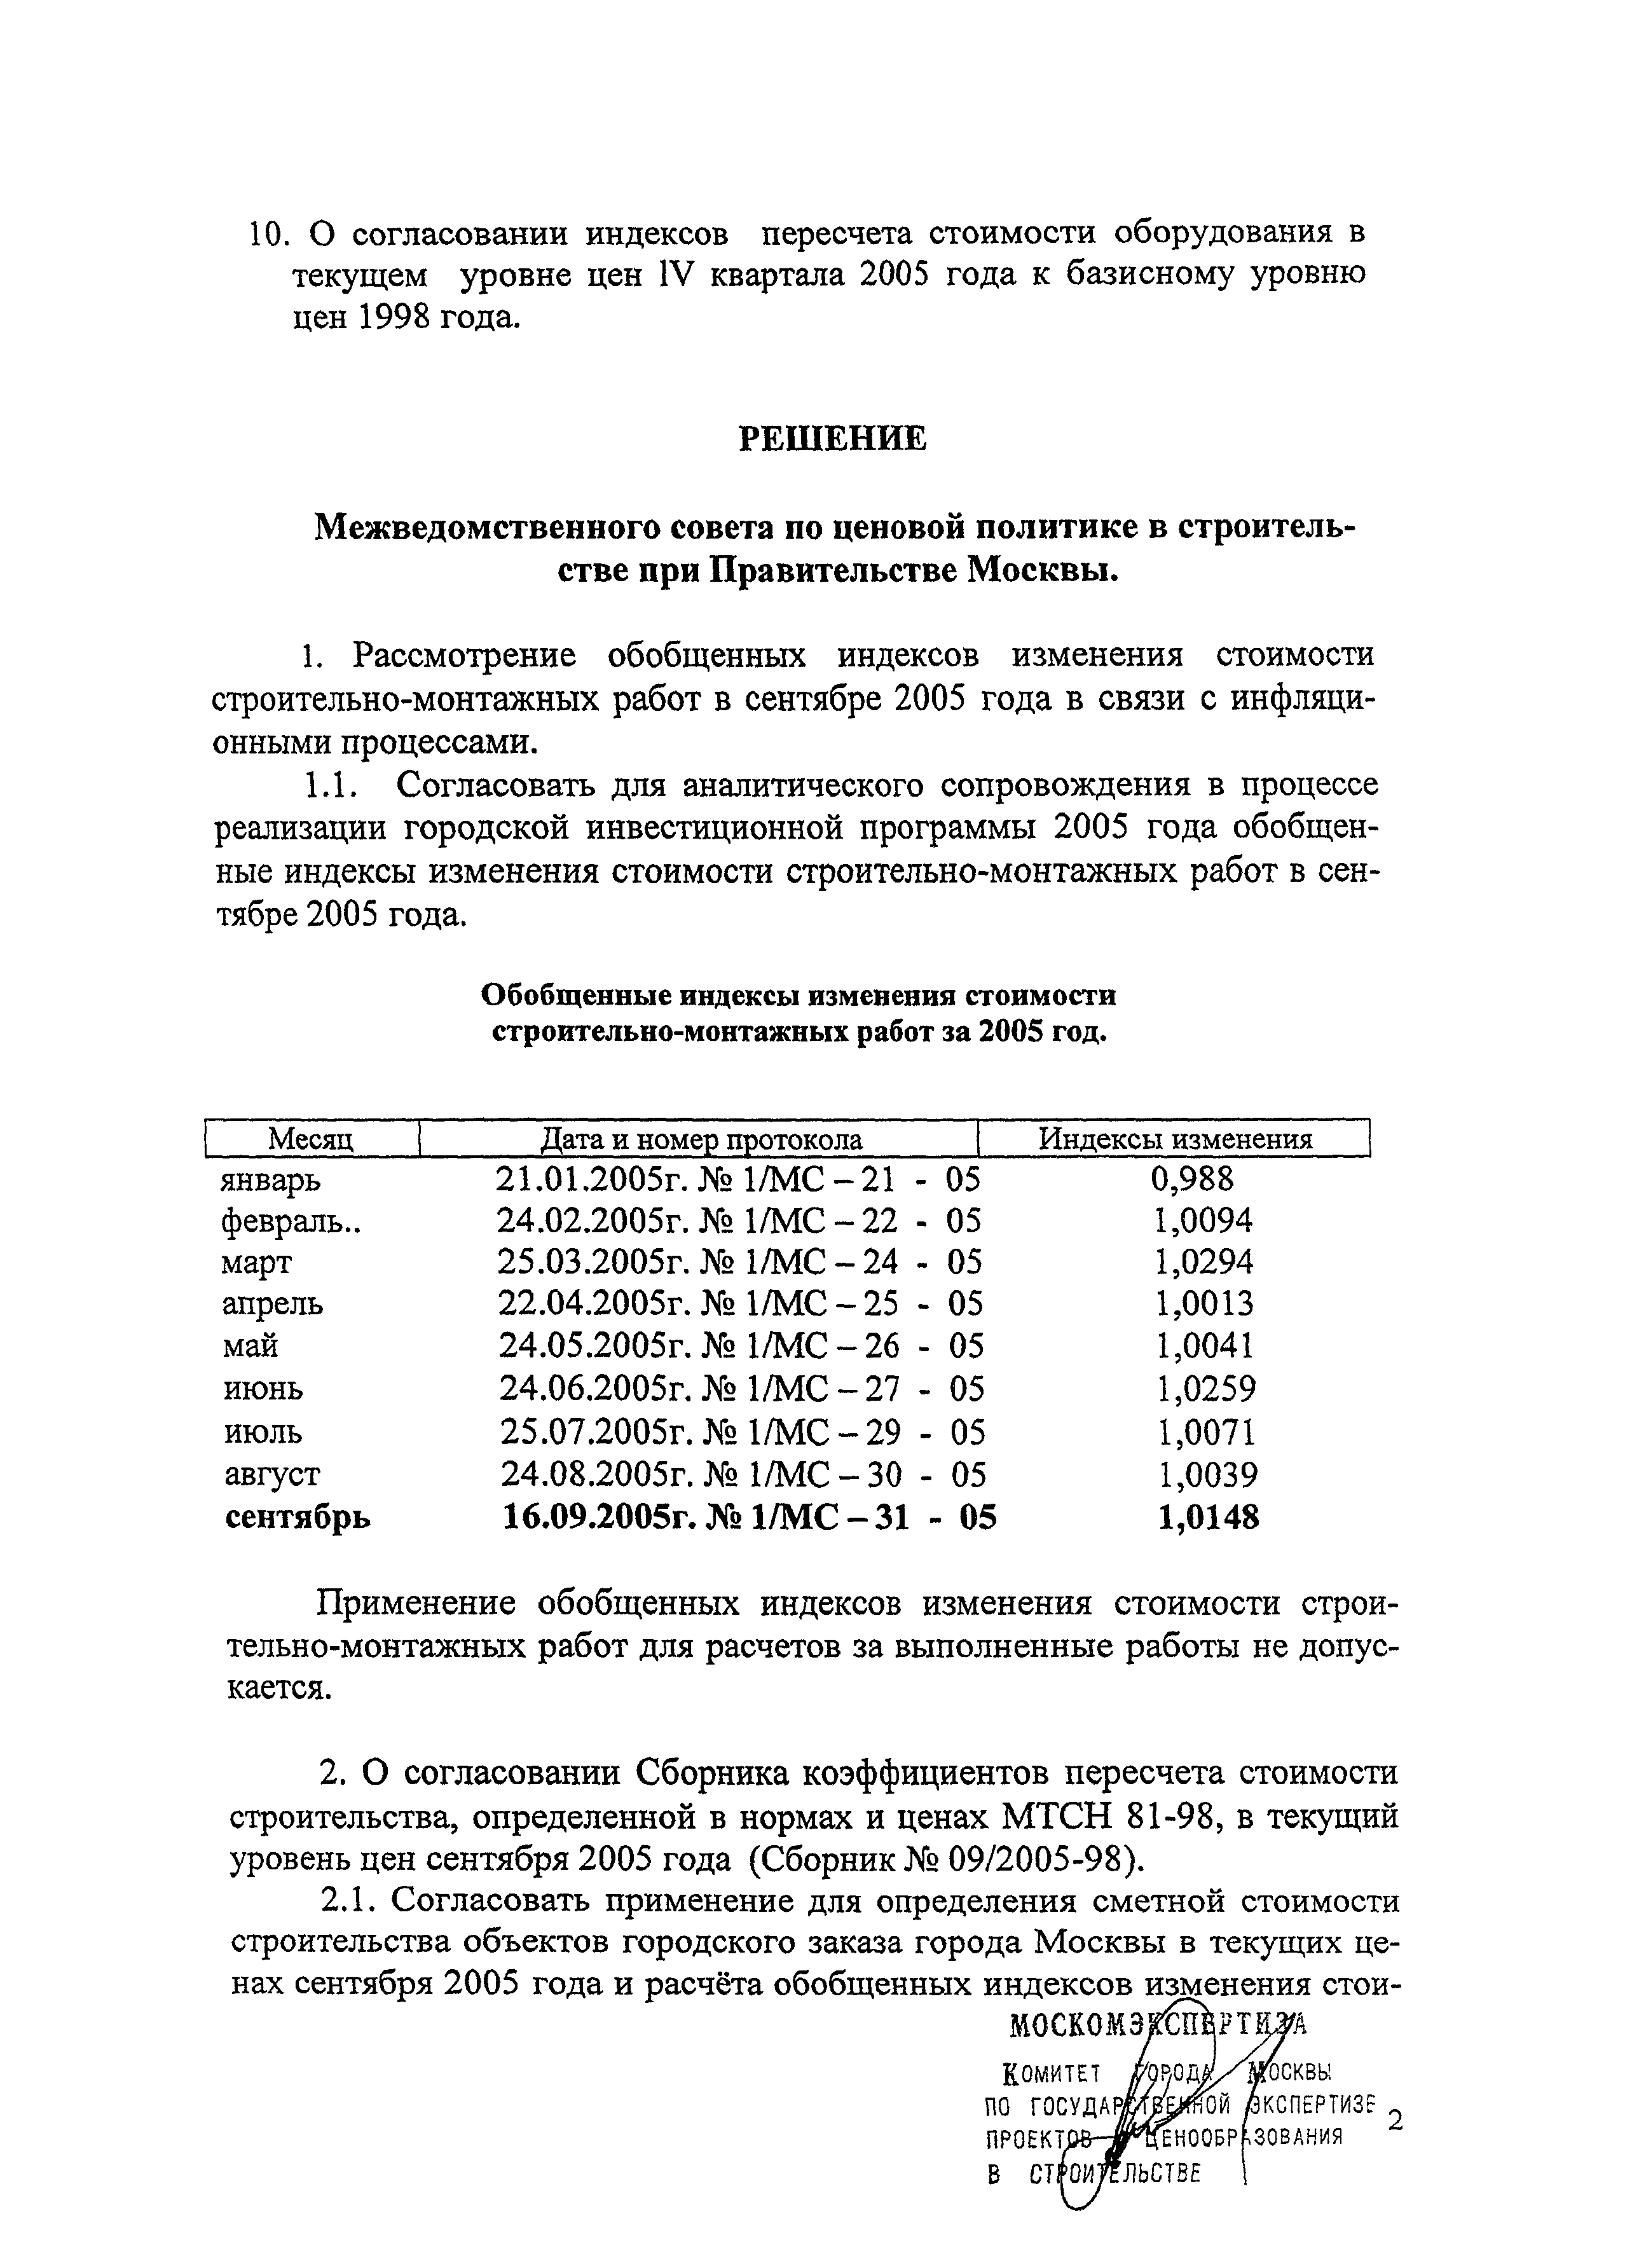 Протокол 1/МС-31-05